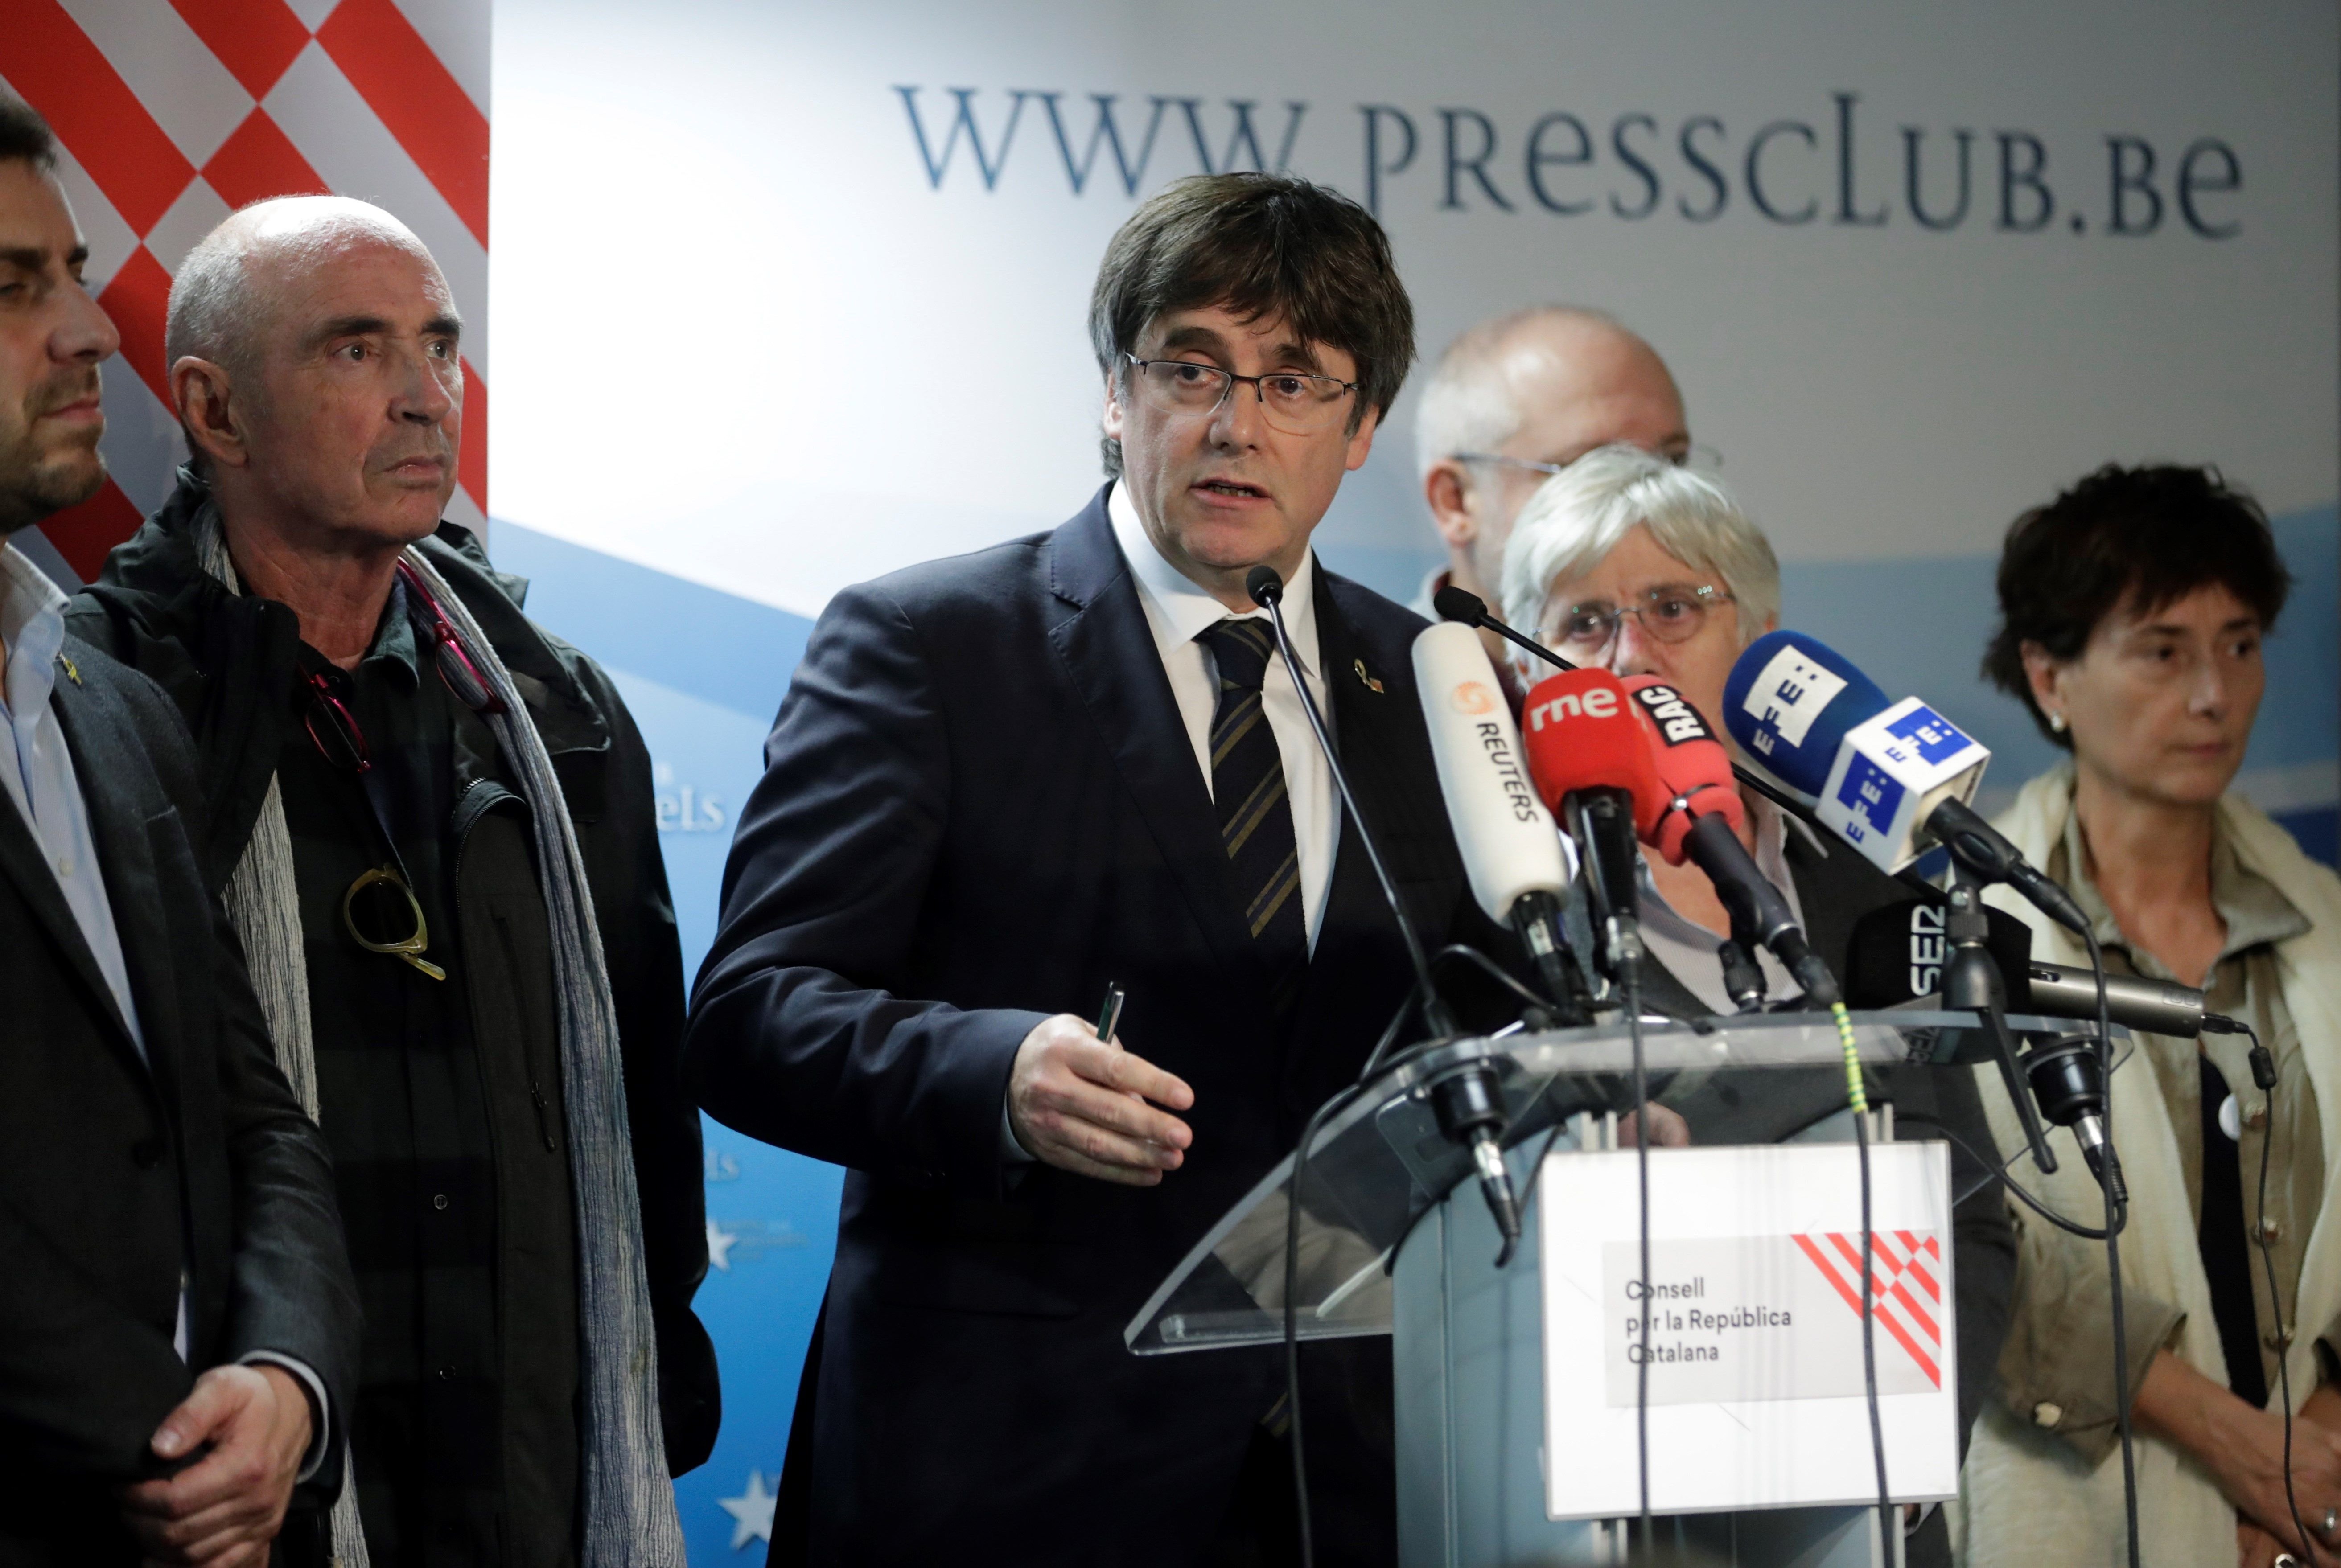 Carles Puigdemont denounces the "outrage" of the sentences